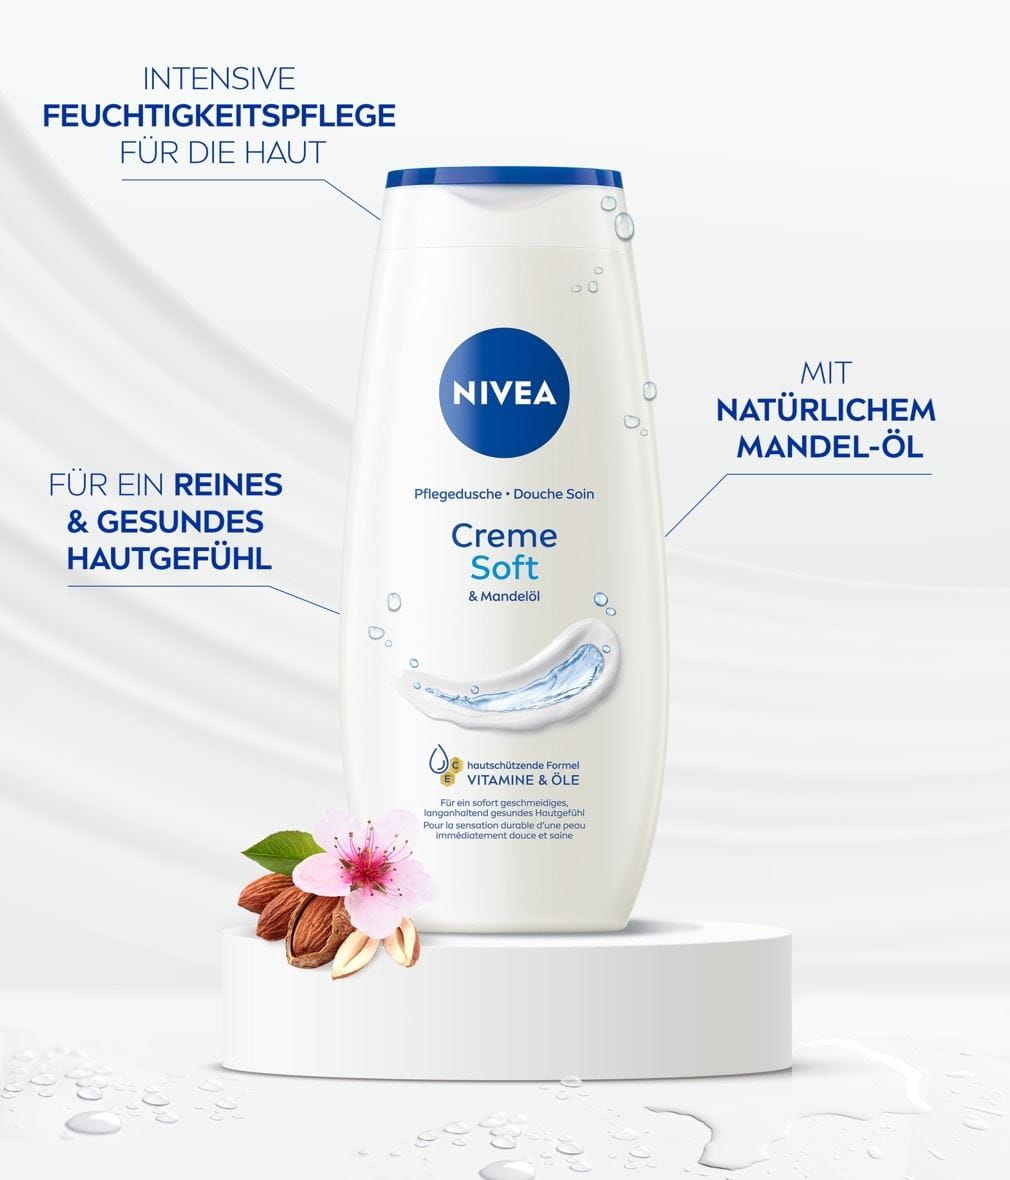 NIVEA Pflegedusche Creme Soft Mandel Oel Produktabbildung mit Benefits